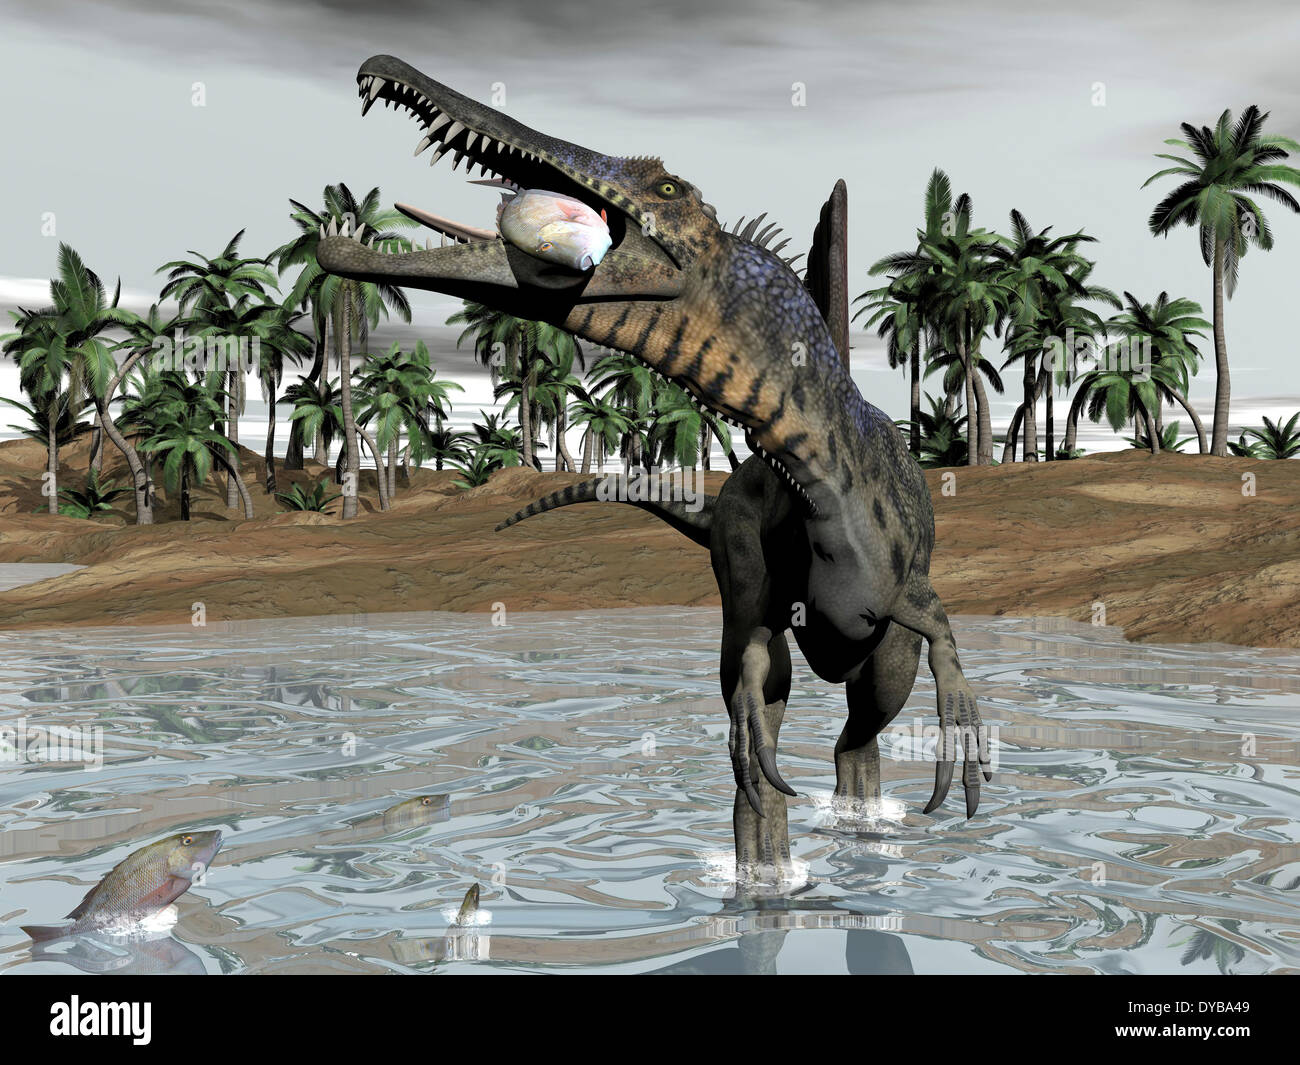 Spinosaurus dinosaur walking in water and feeding on fish. Stock Photo